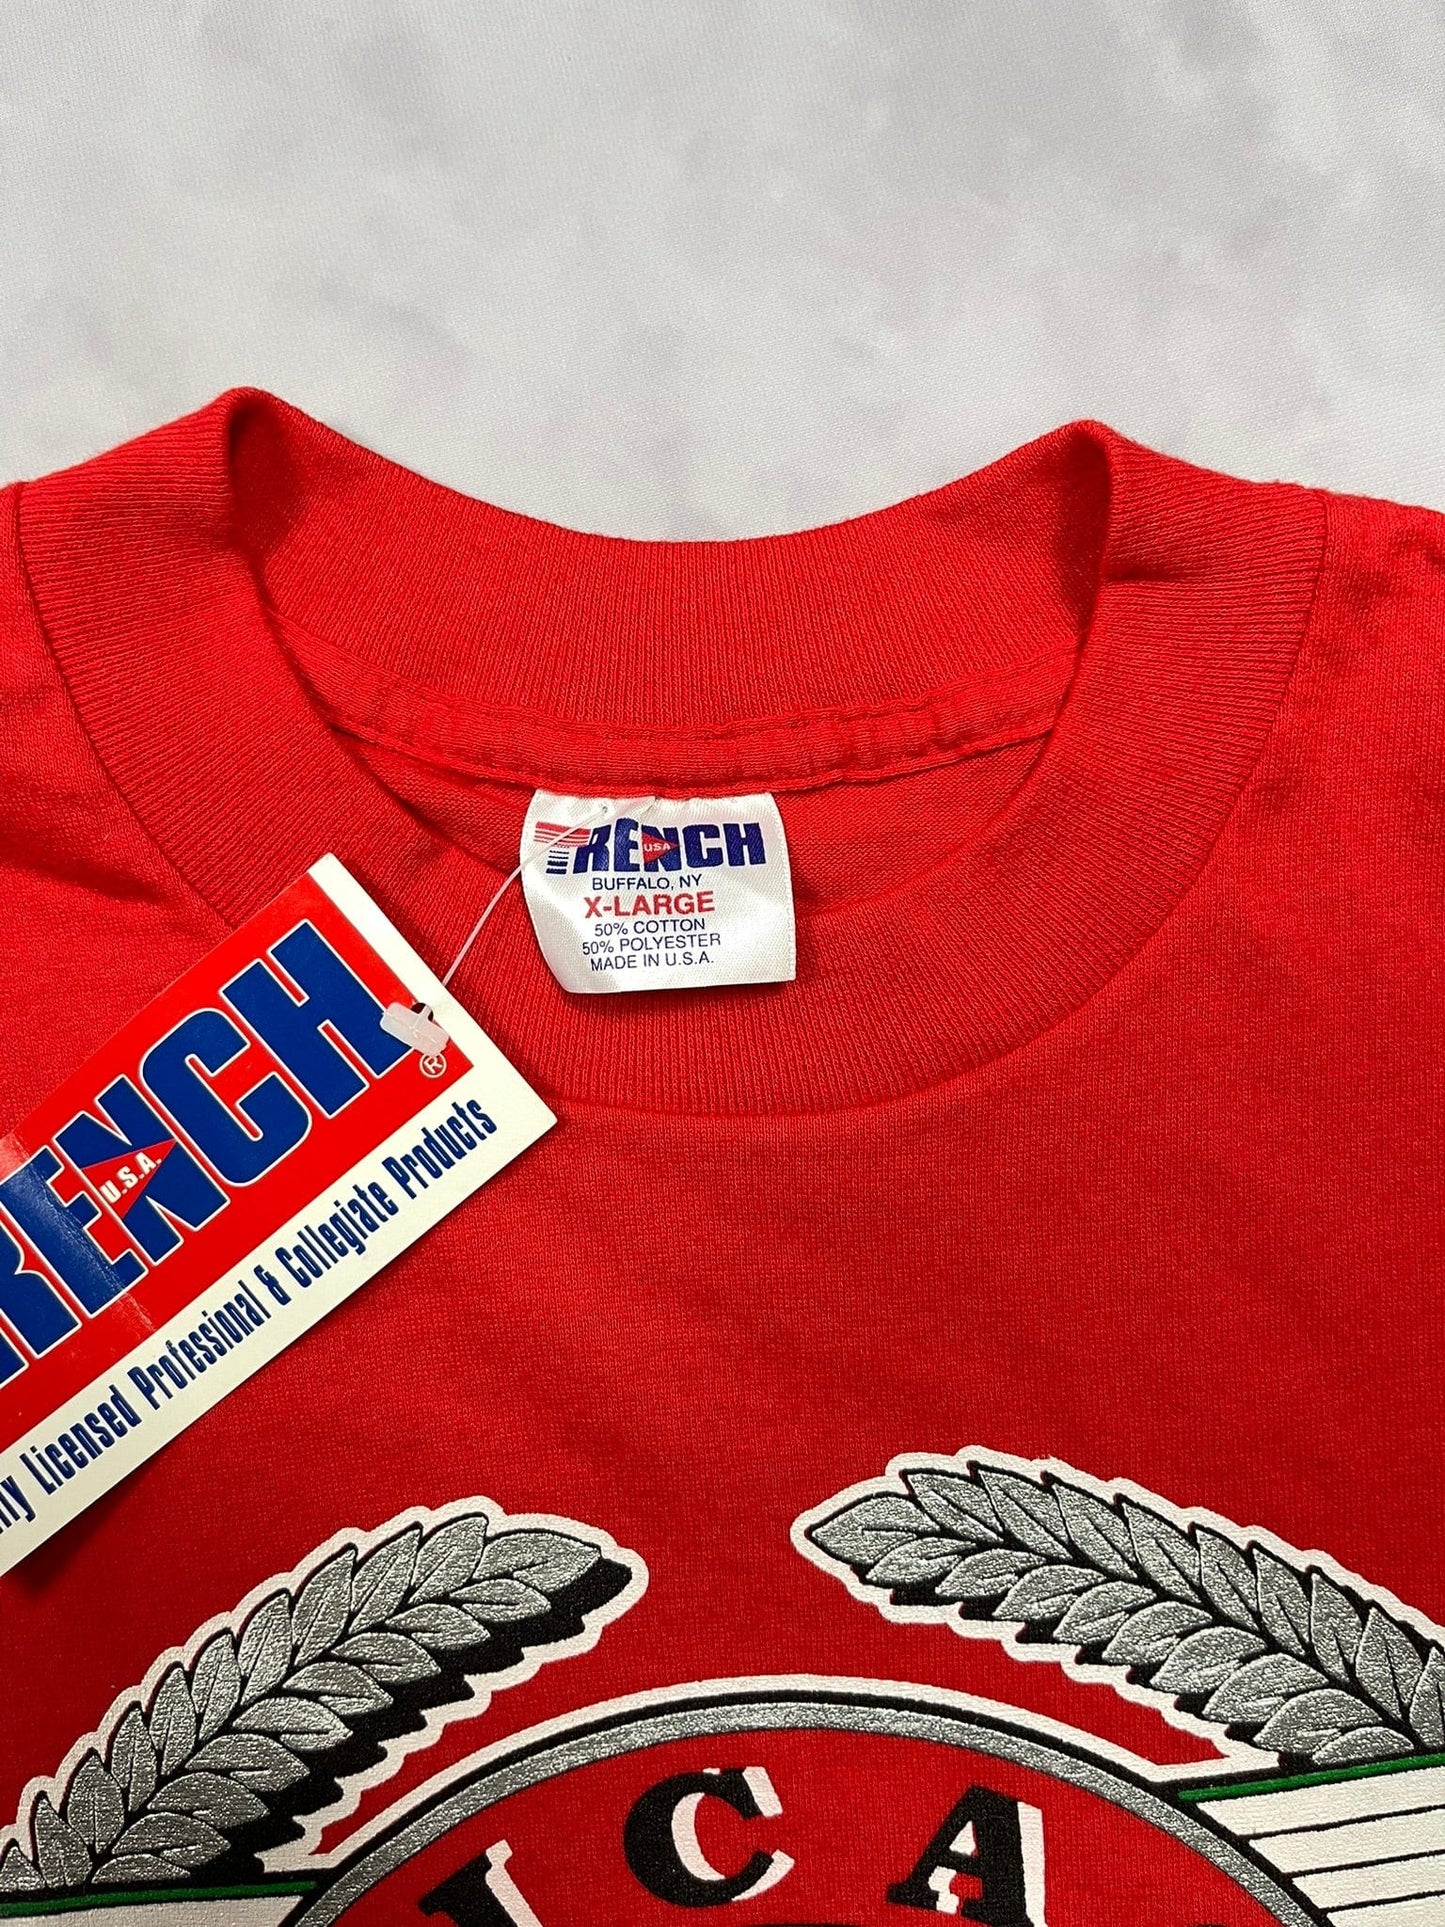 The Vintage Racks T-Shirt Chicago Blackhawks - XL